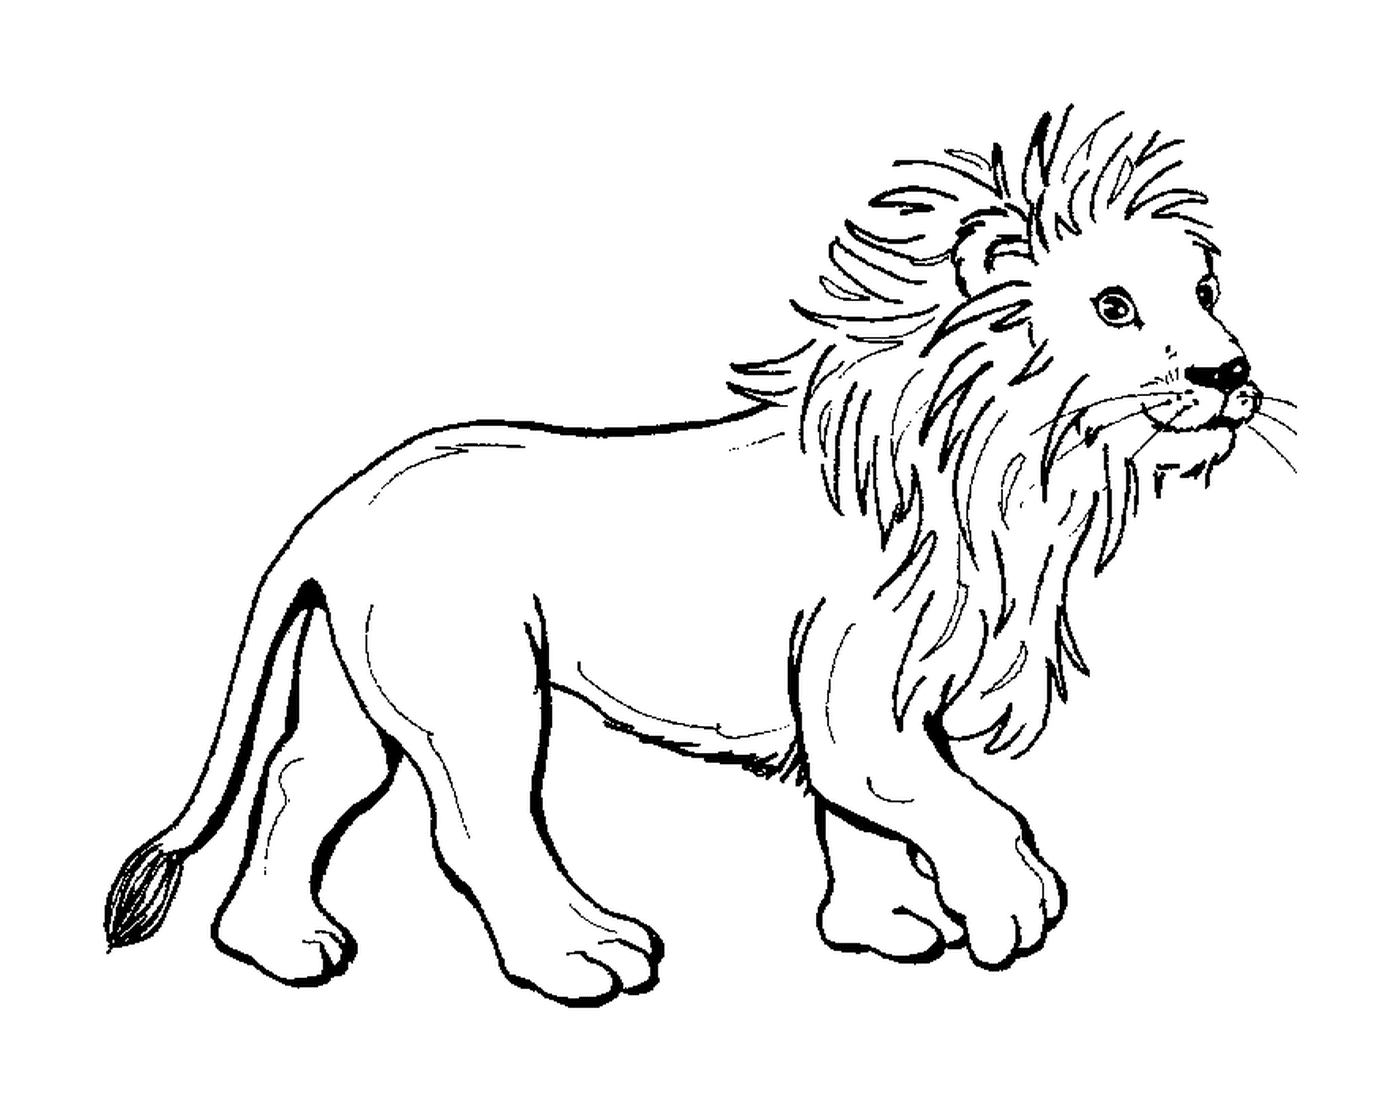  Giovane, maestoso leone 